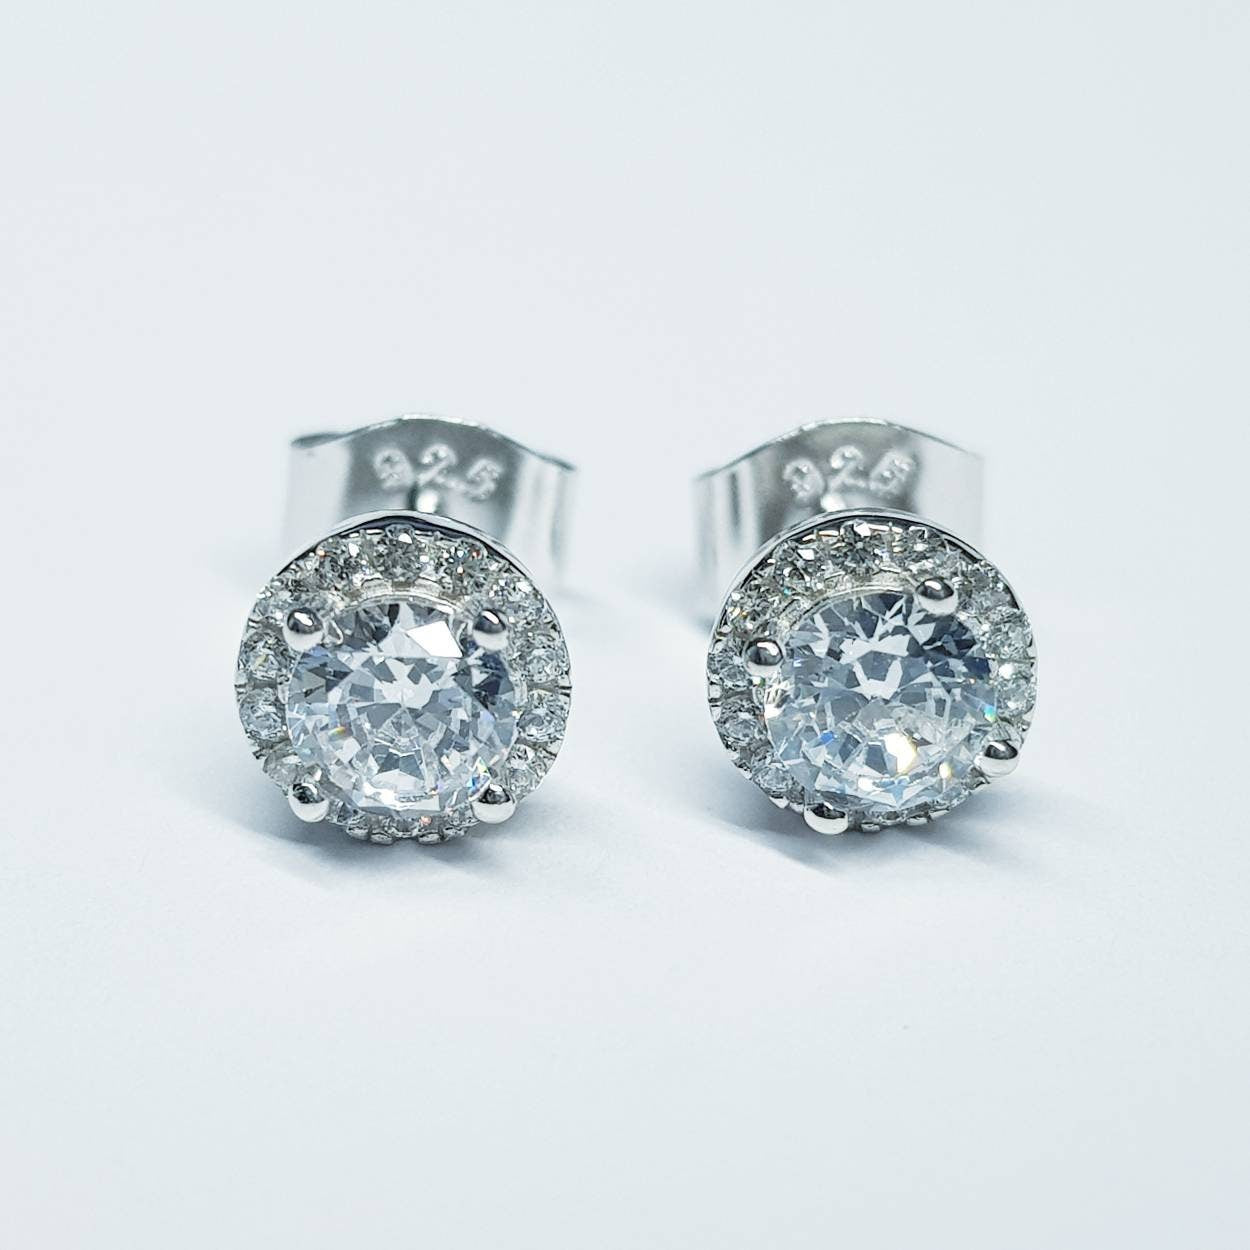 Small diamond cz earrings, small stud earrings, vintage earrings, diamond halo earrings, april birthstone studs